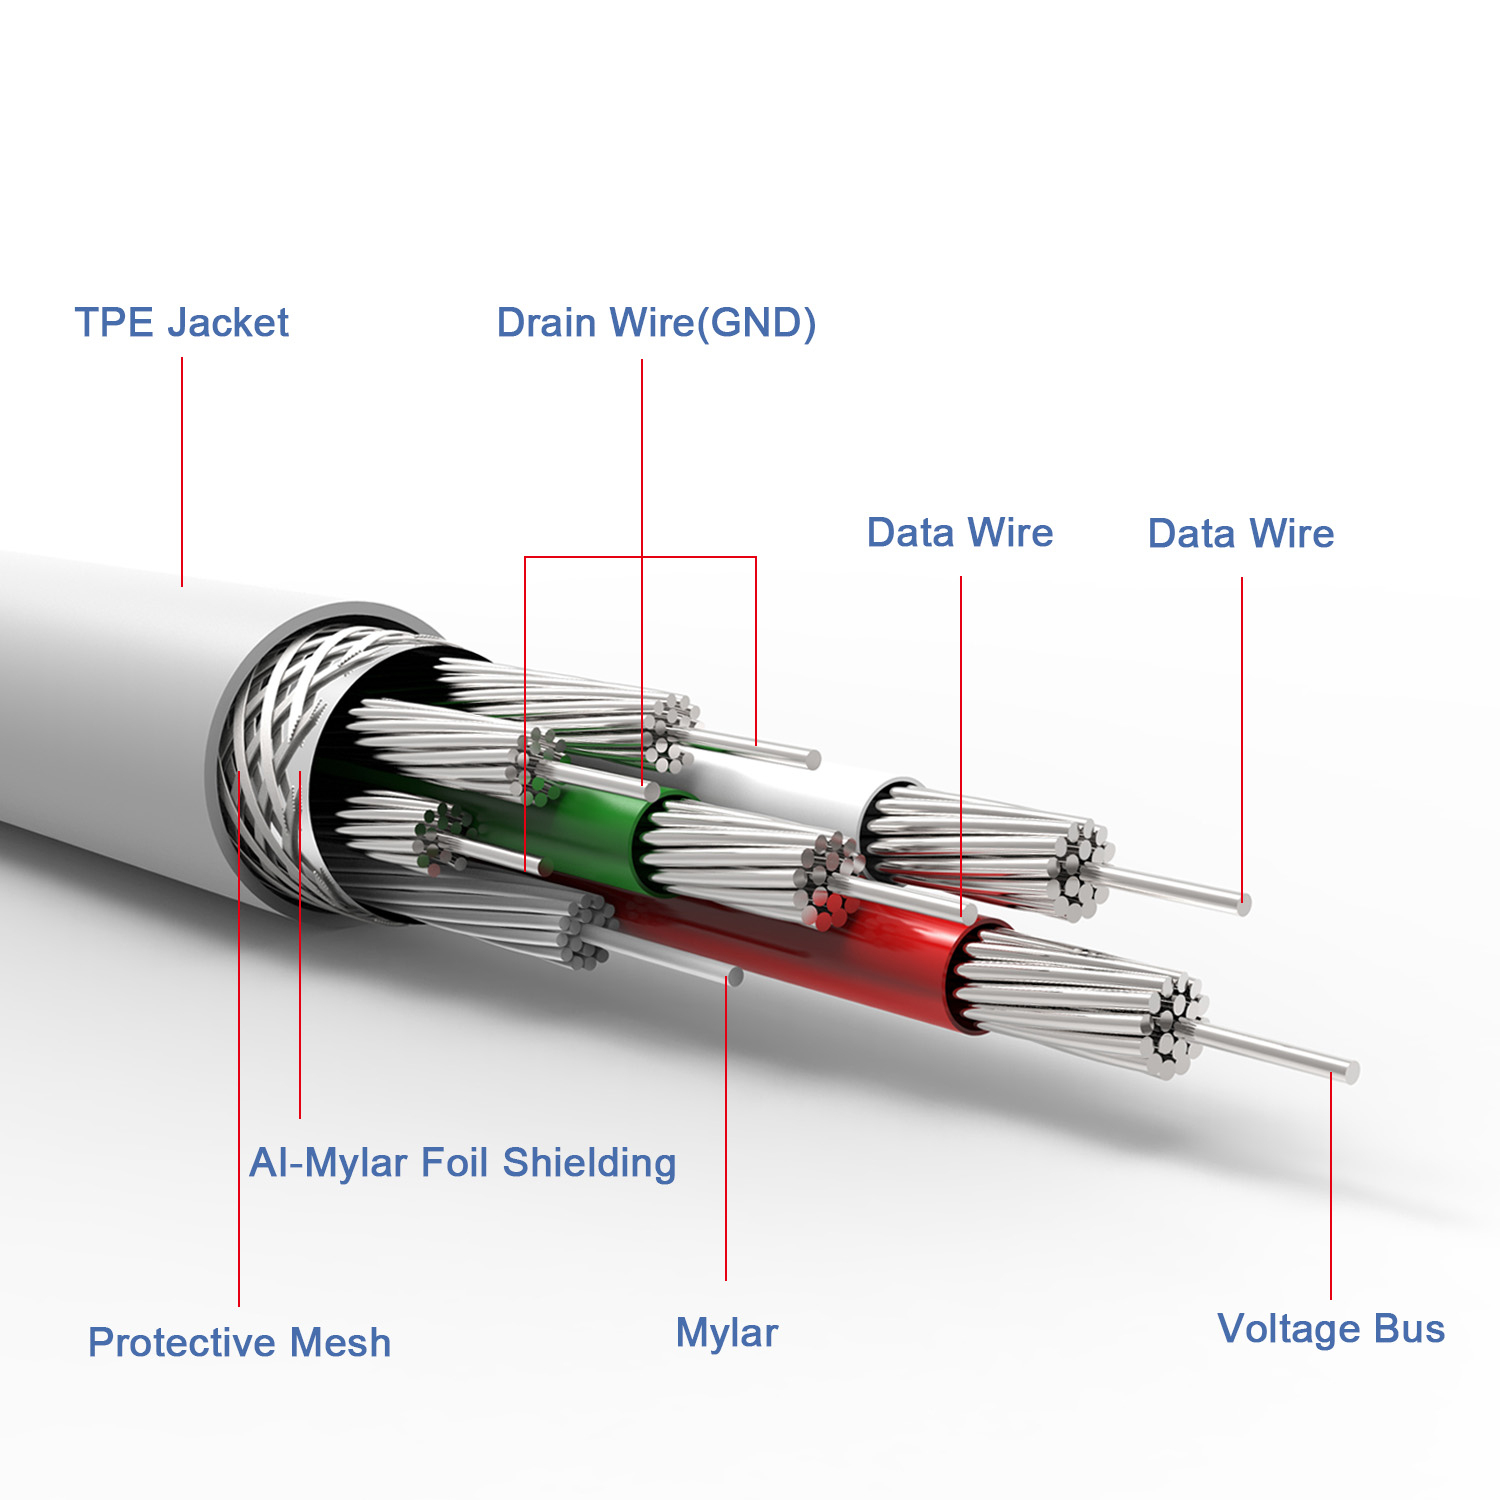 Iphone 8 Pin Wiring Diagram | Wiring Diagram - Iphone Lightning Cable Wiring Diagram